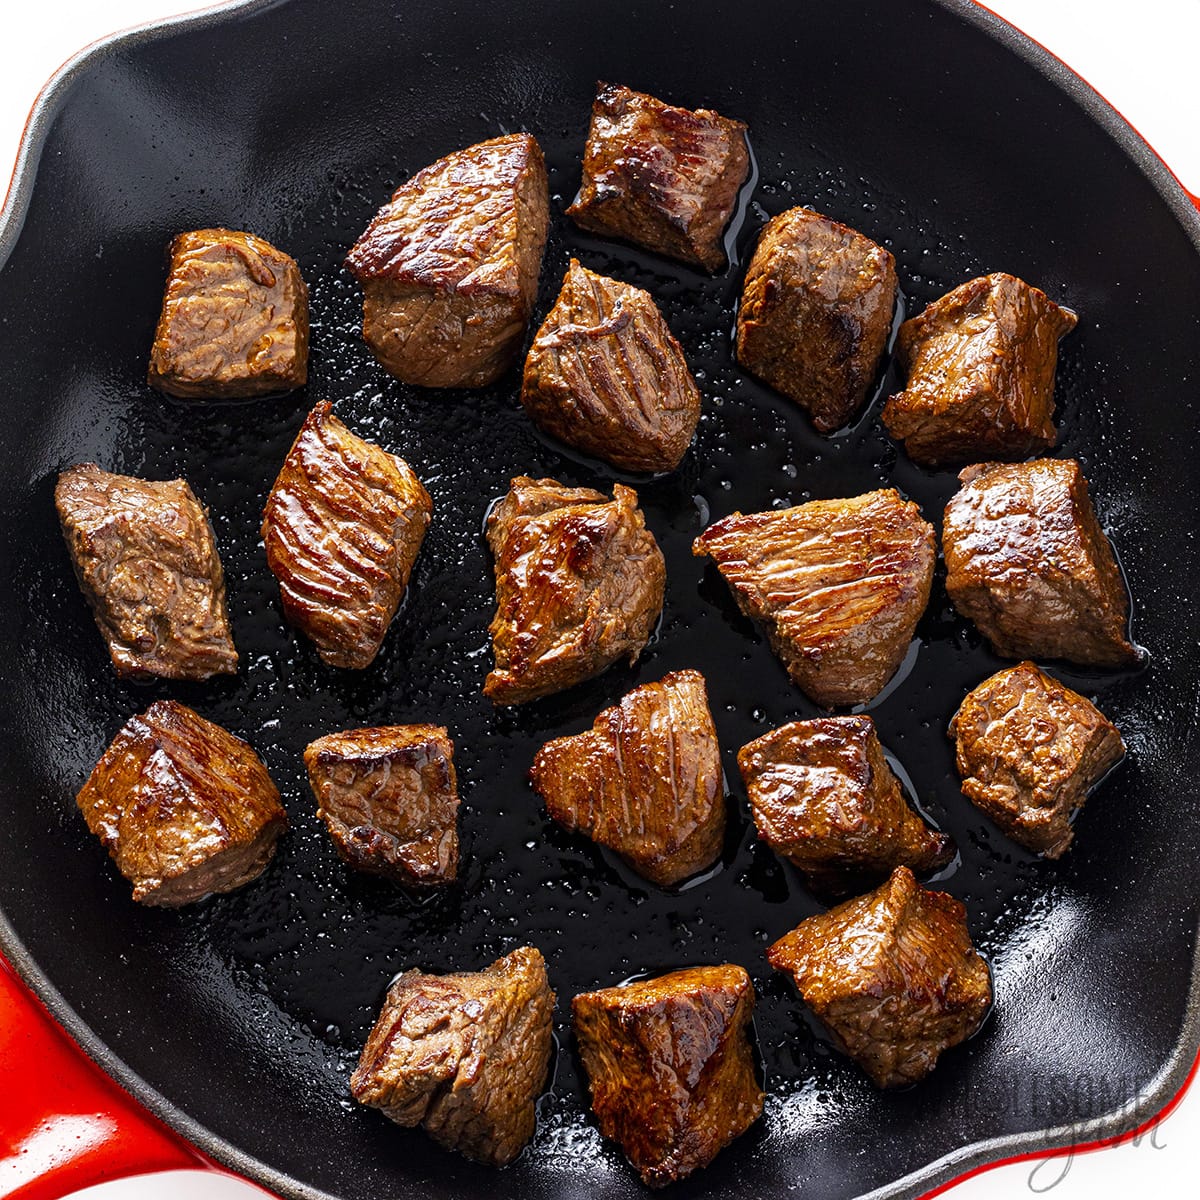 Seared sirloin steak tips in skillet.